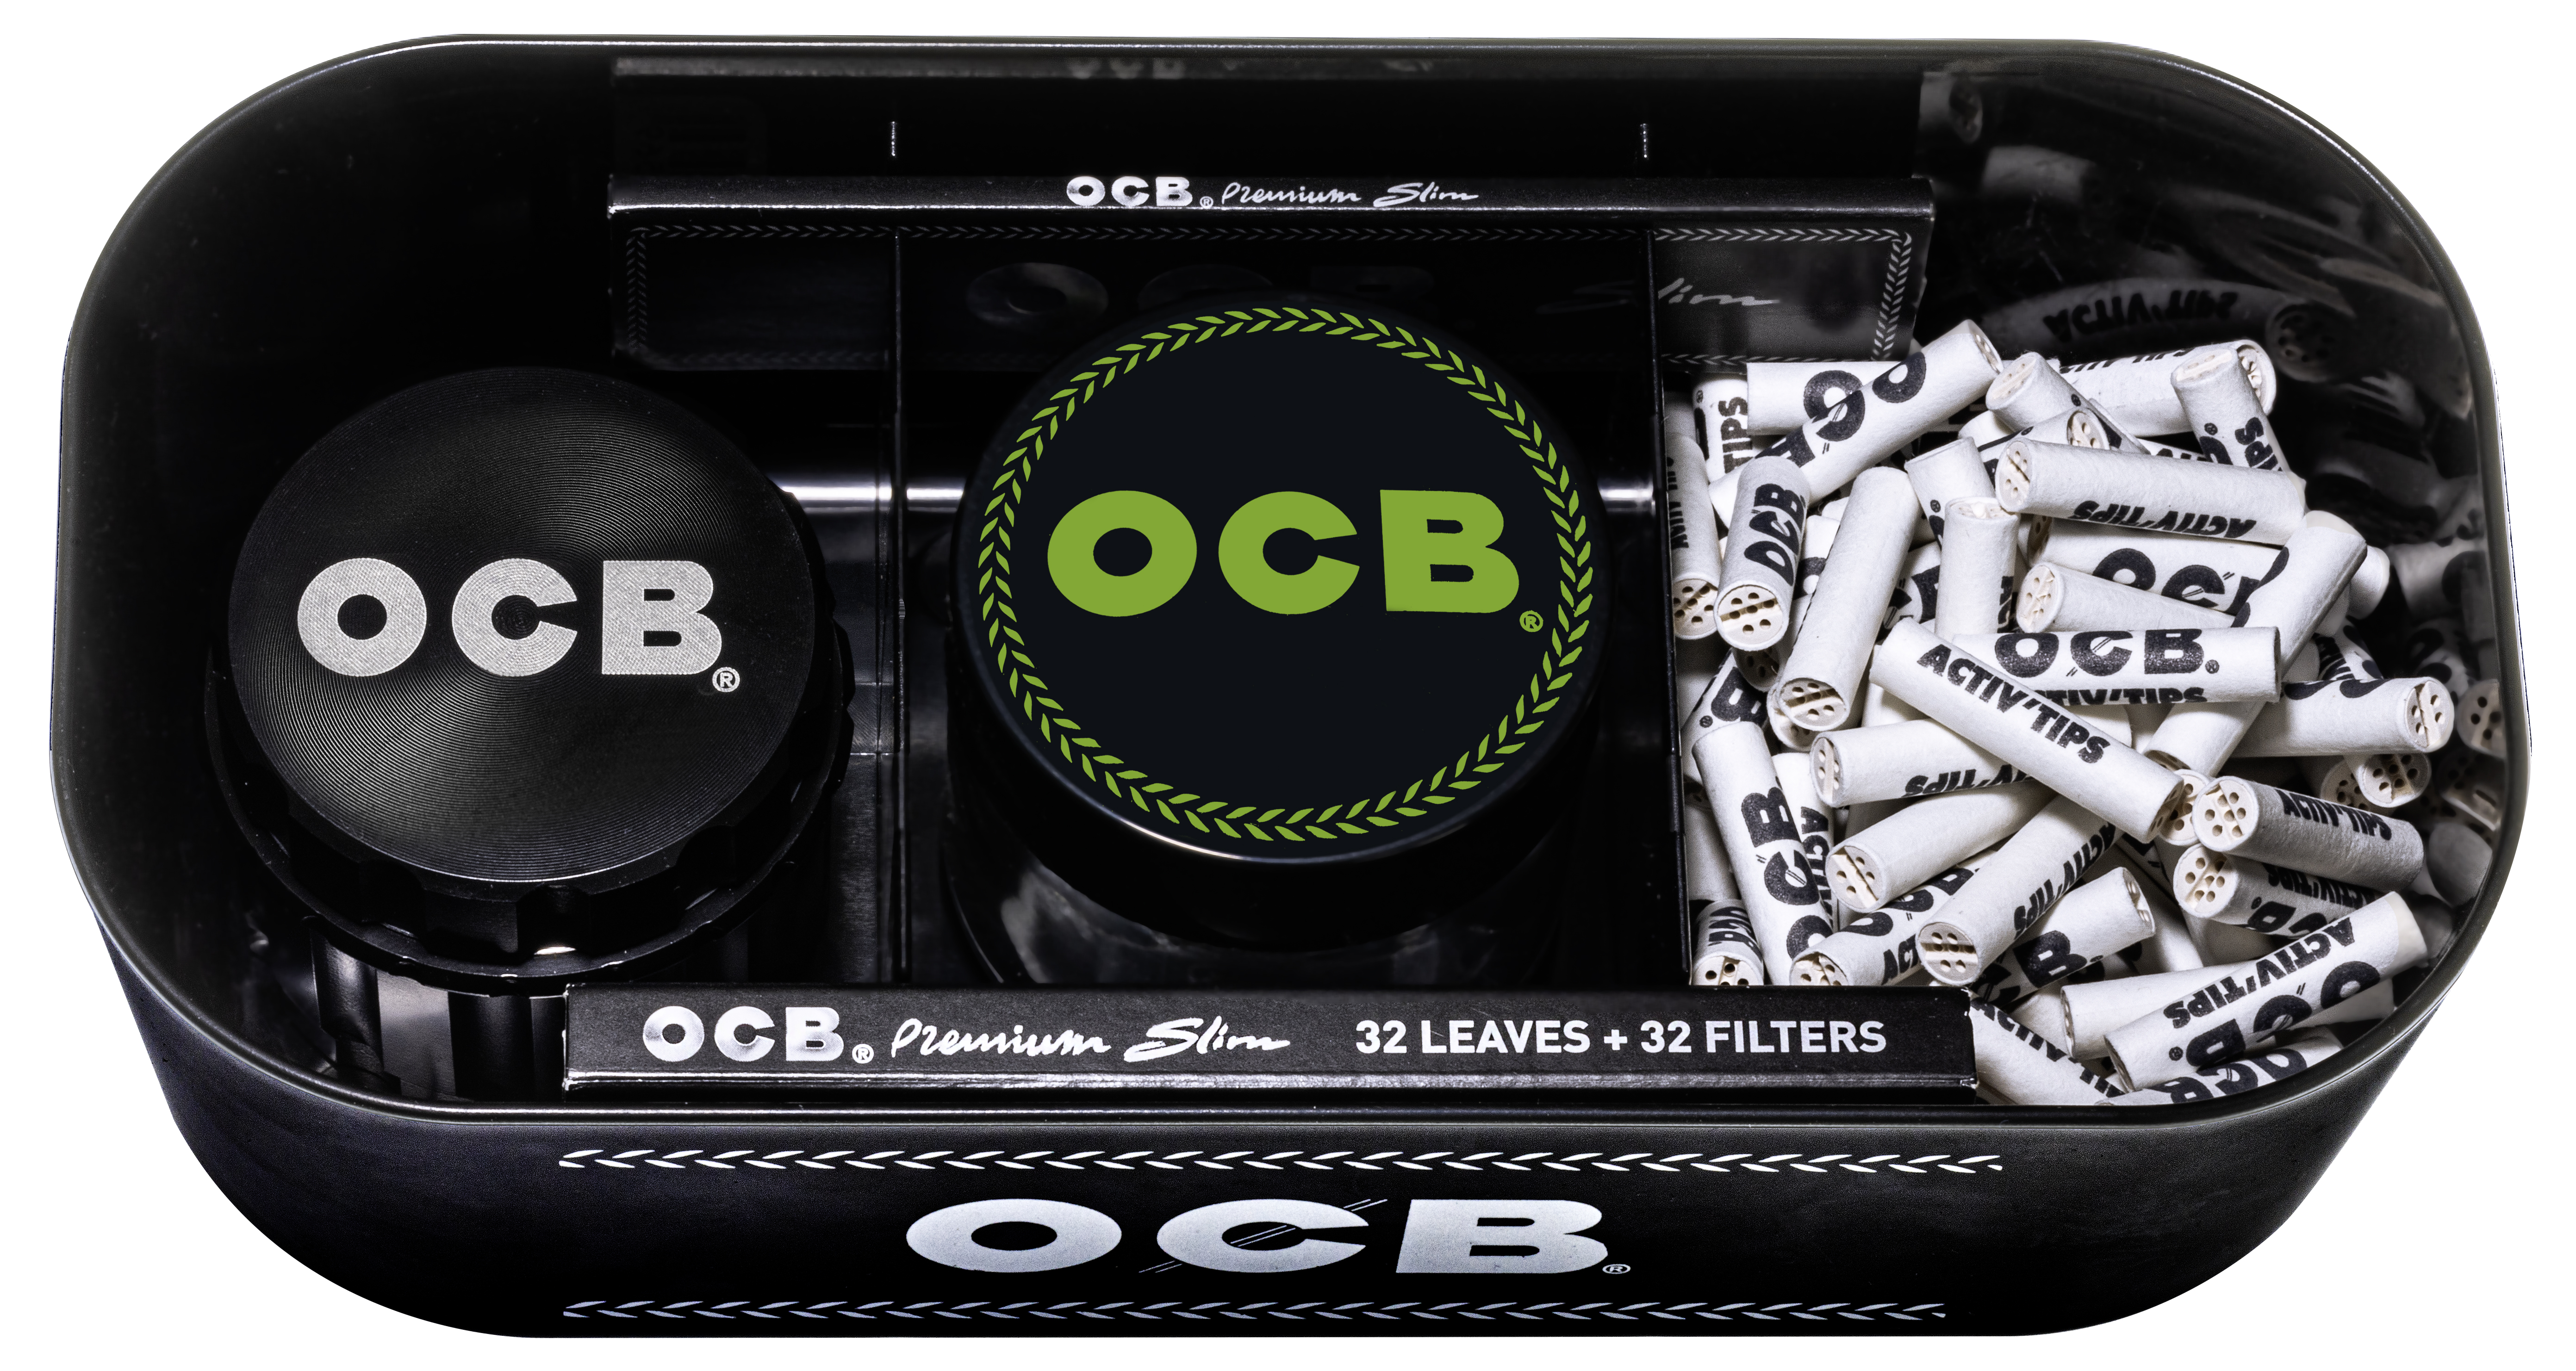 OCB Bausatz Aktion + Wunschgravur